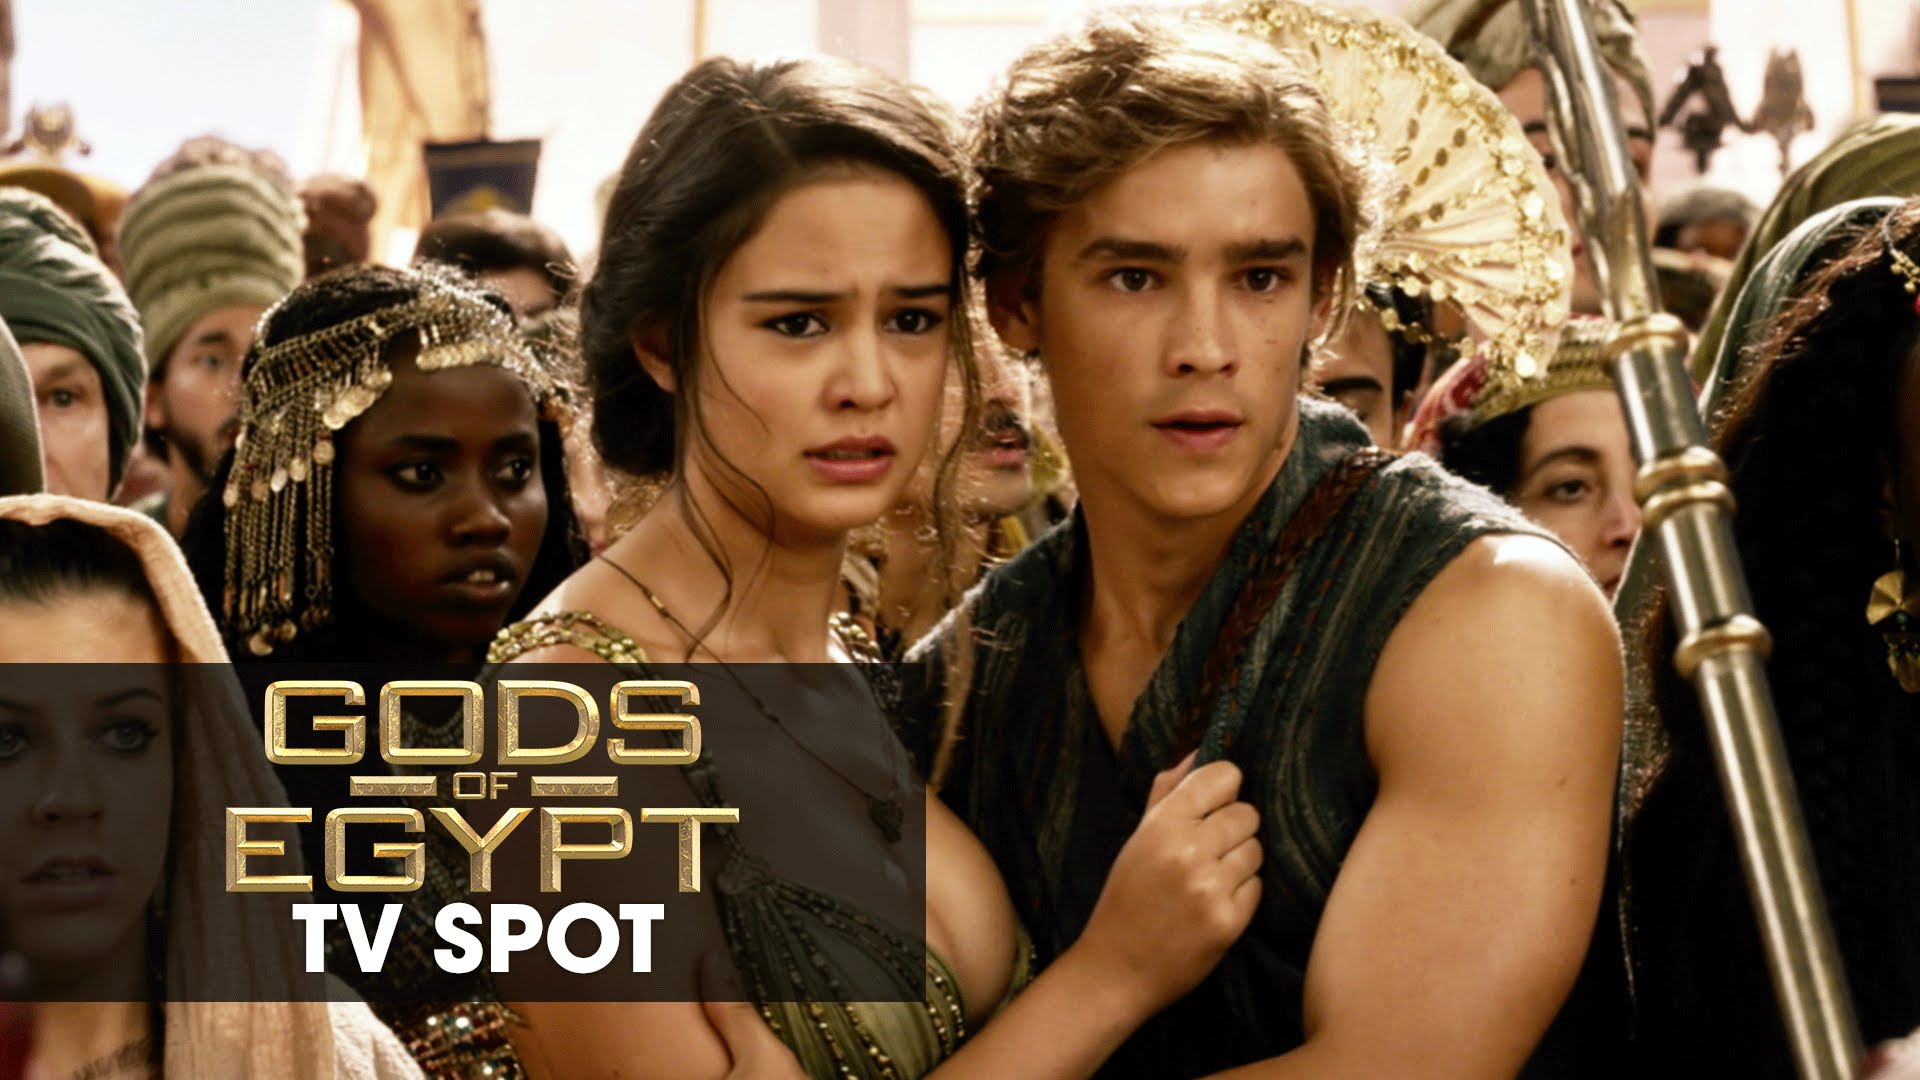 Gods of Egypt (2016 Movie - Gerard Butler) Official TV Spot – “Keep Up”